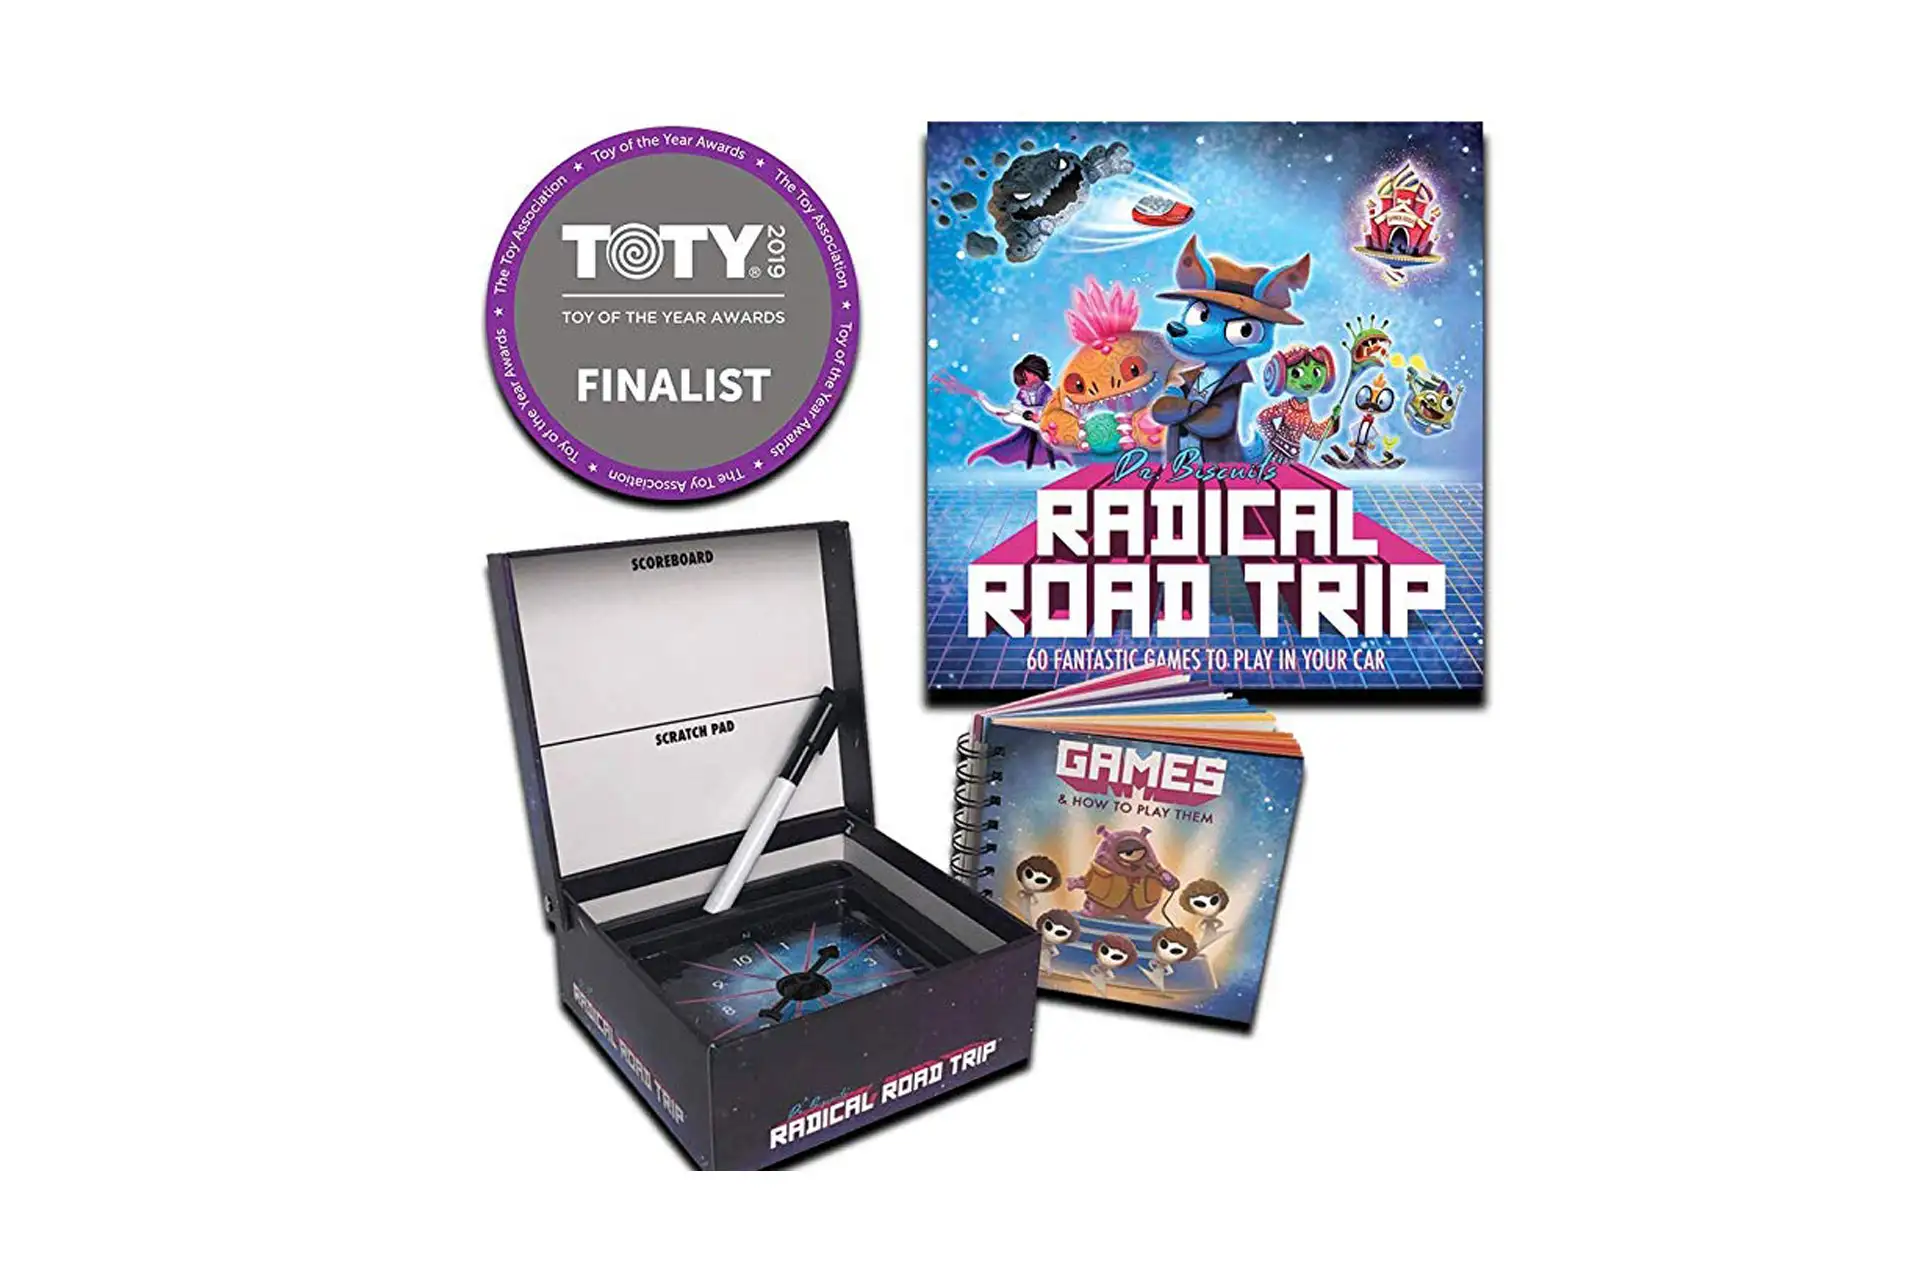 Radical Road Trip Travel Game; Courtesy of Amazon